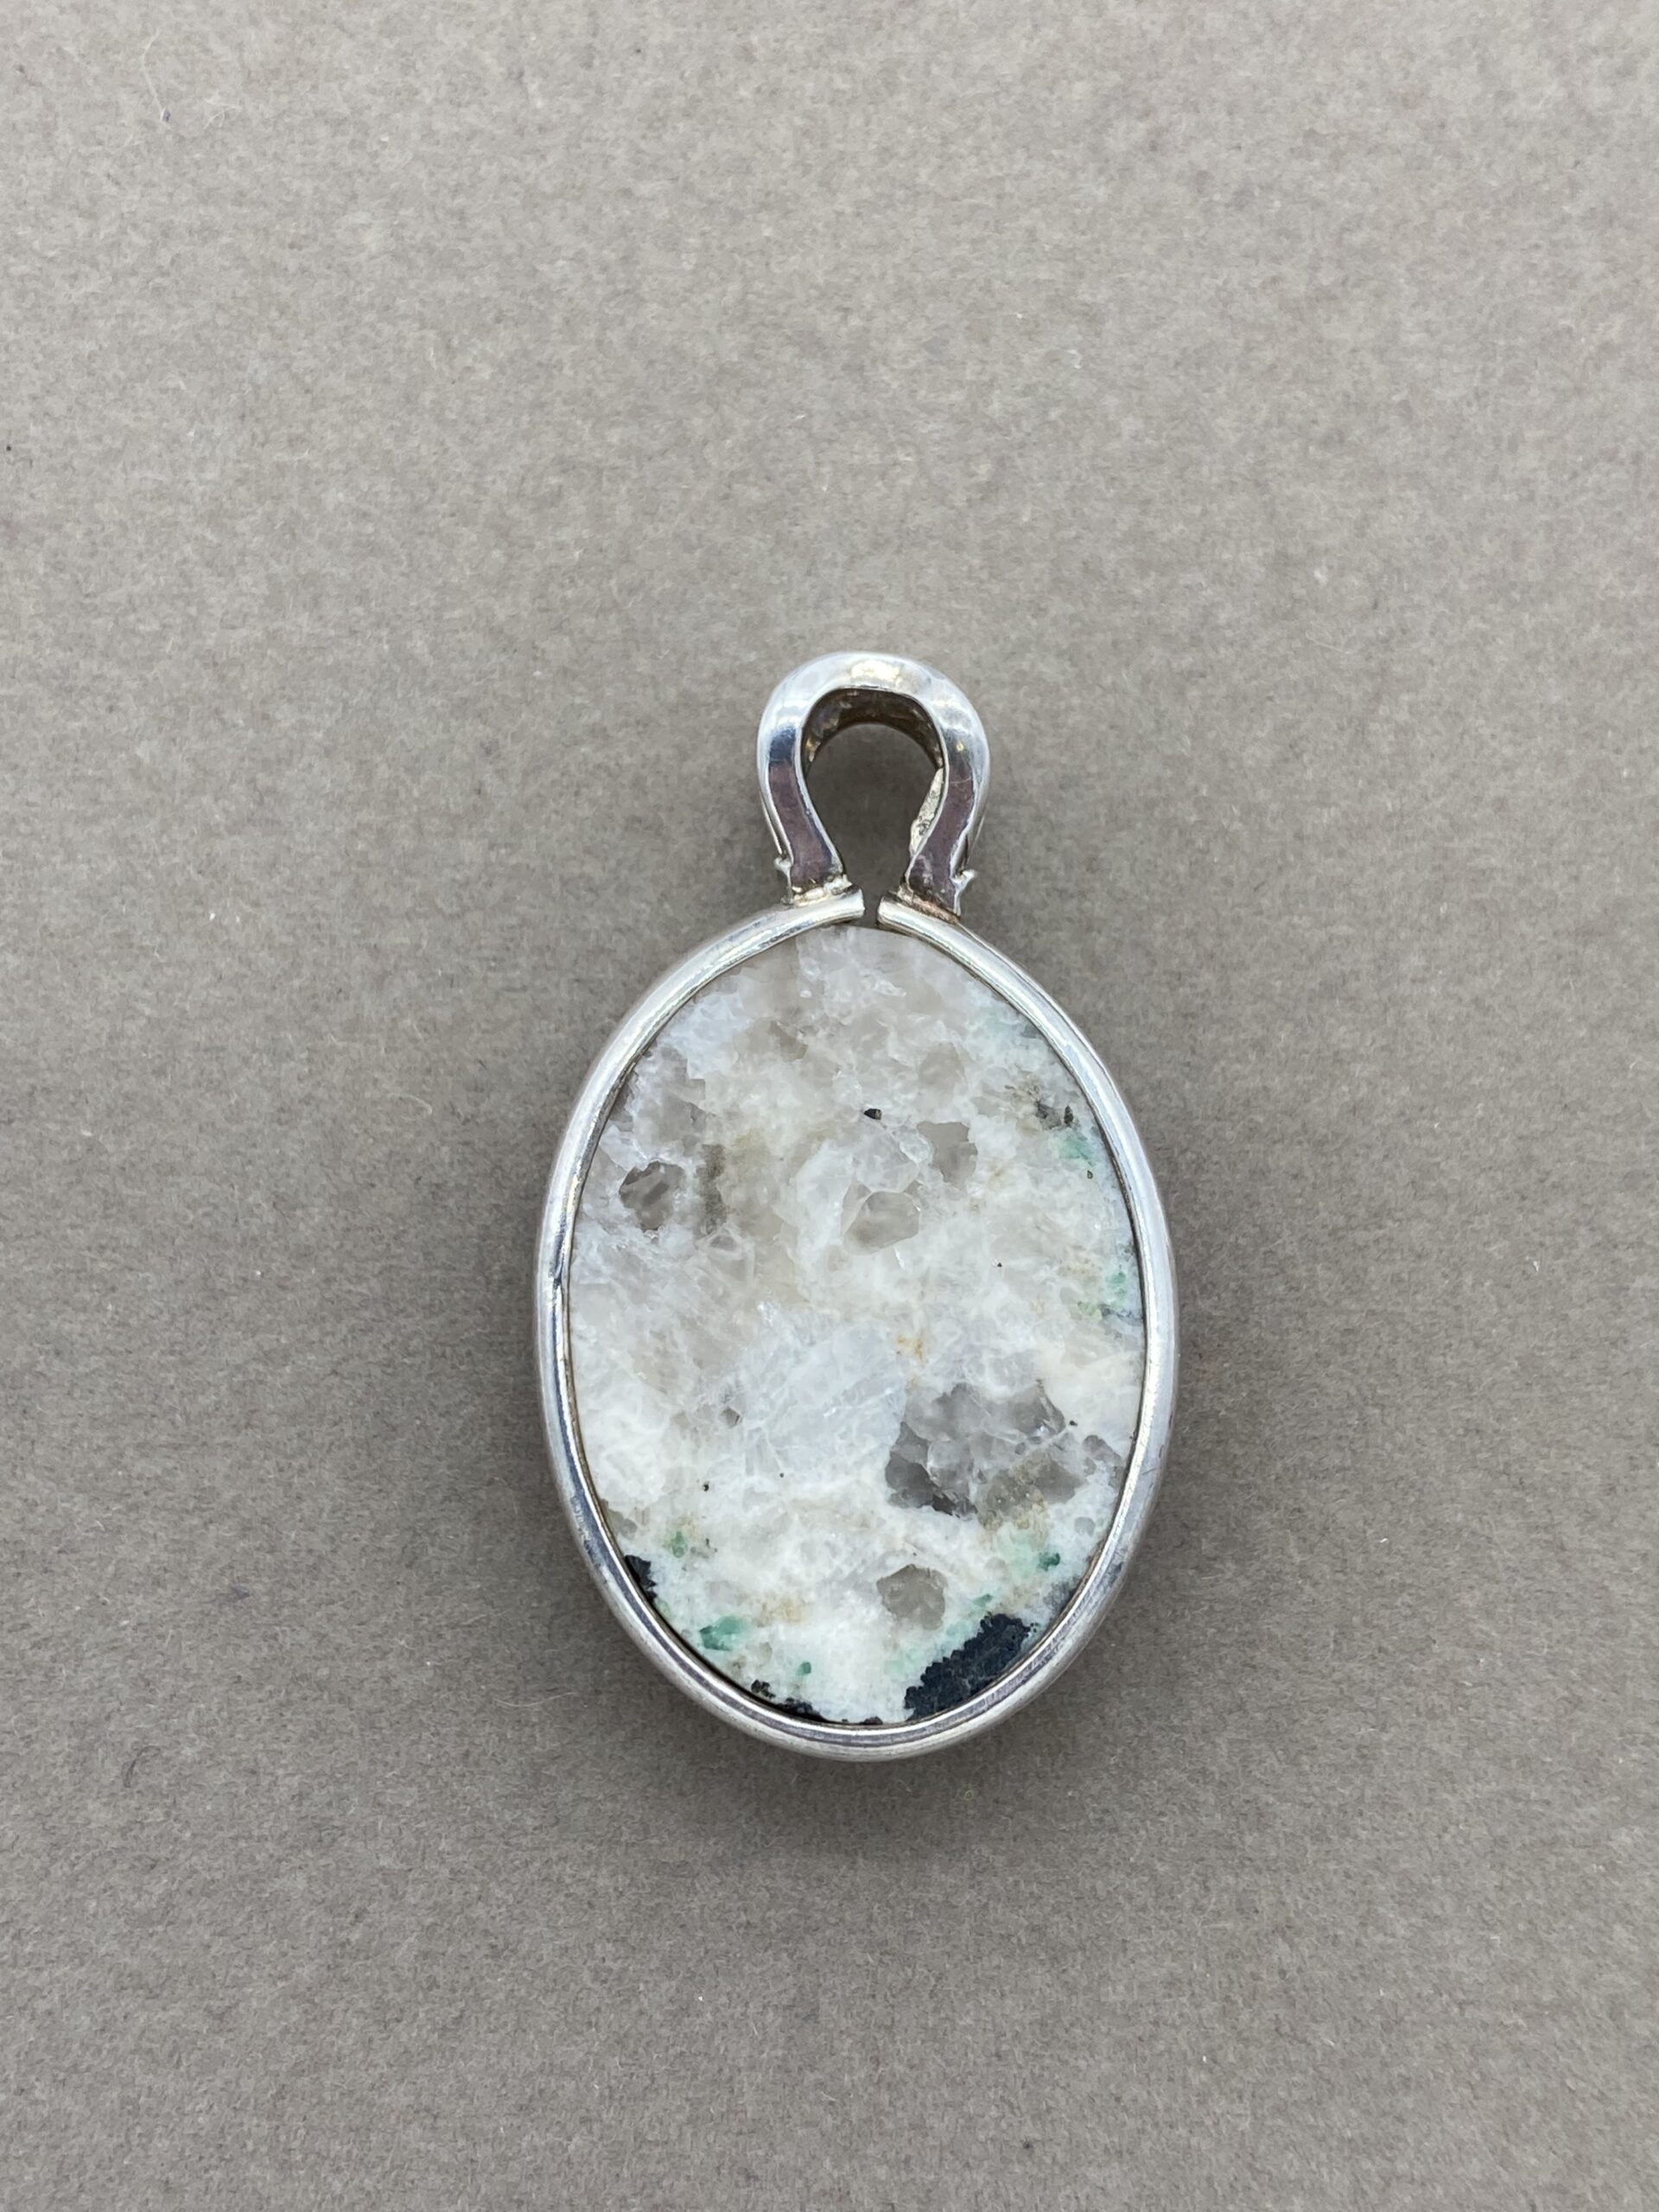 North Carolina Crabtree Emerald Pendant in Sterling Silver